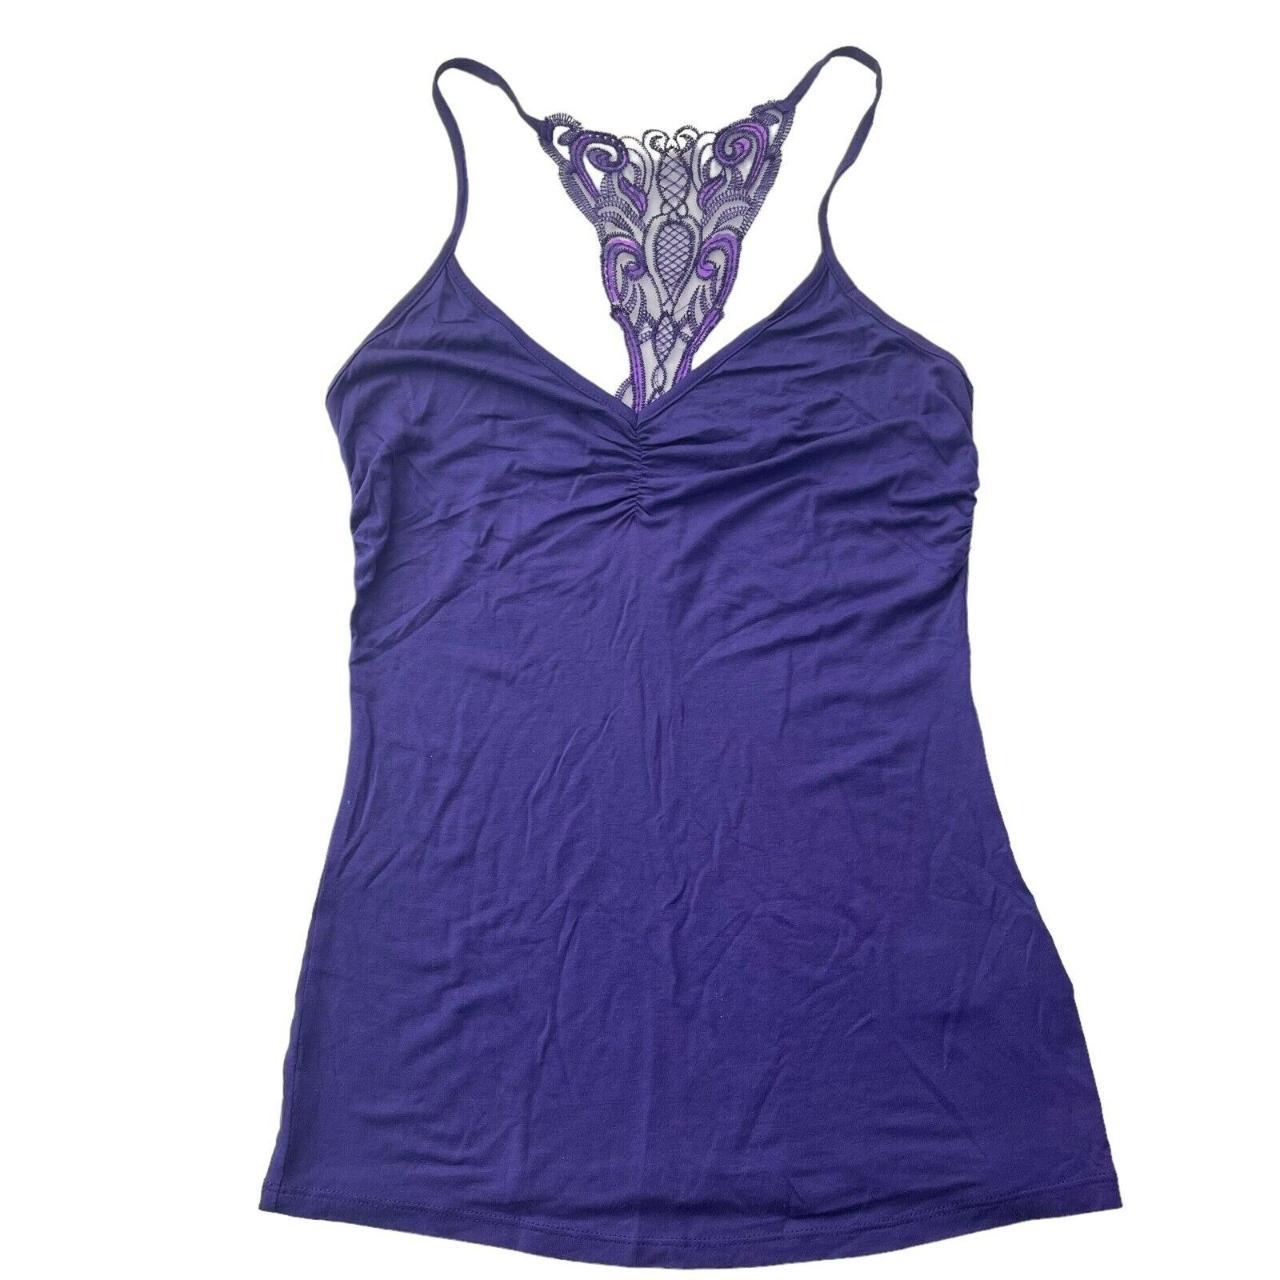 Pimkie Women's Purple Vest (2)